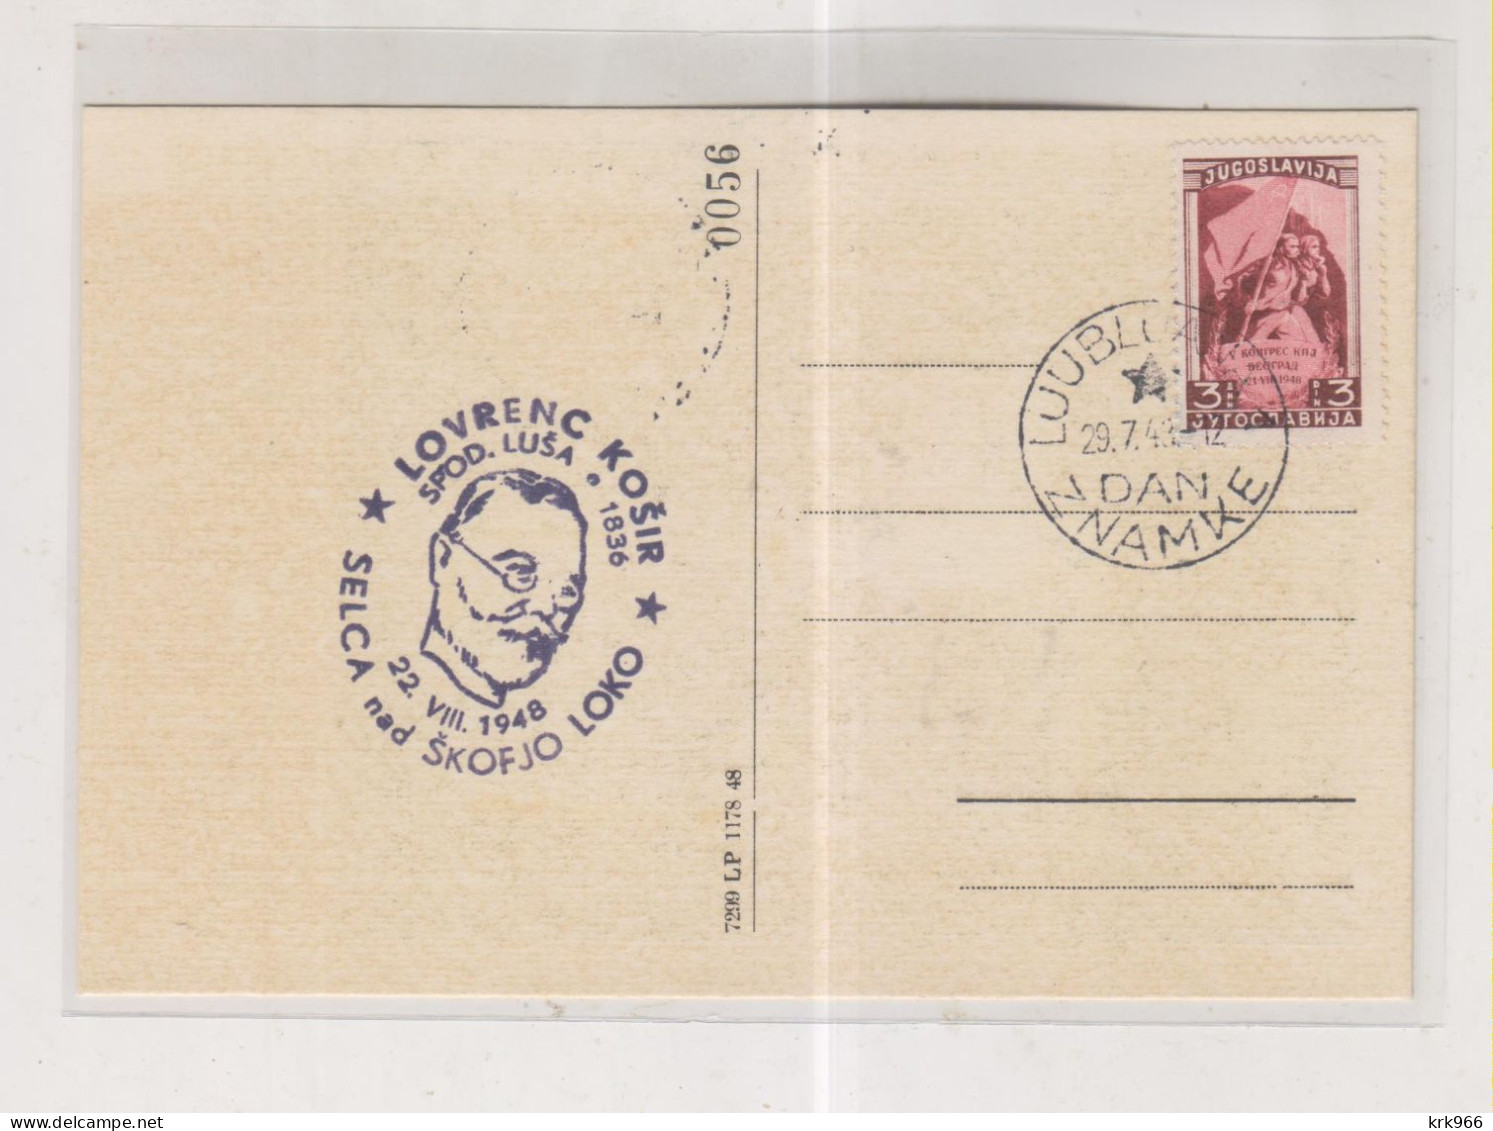 YUGOSLAVIA  KOSIR Nice Postcard - Covers & Documents